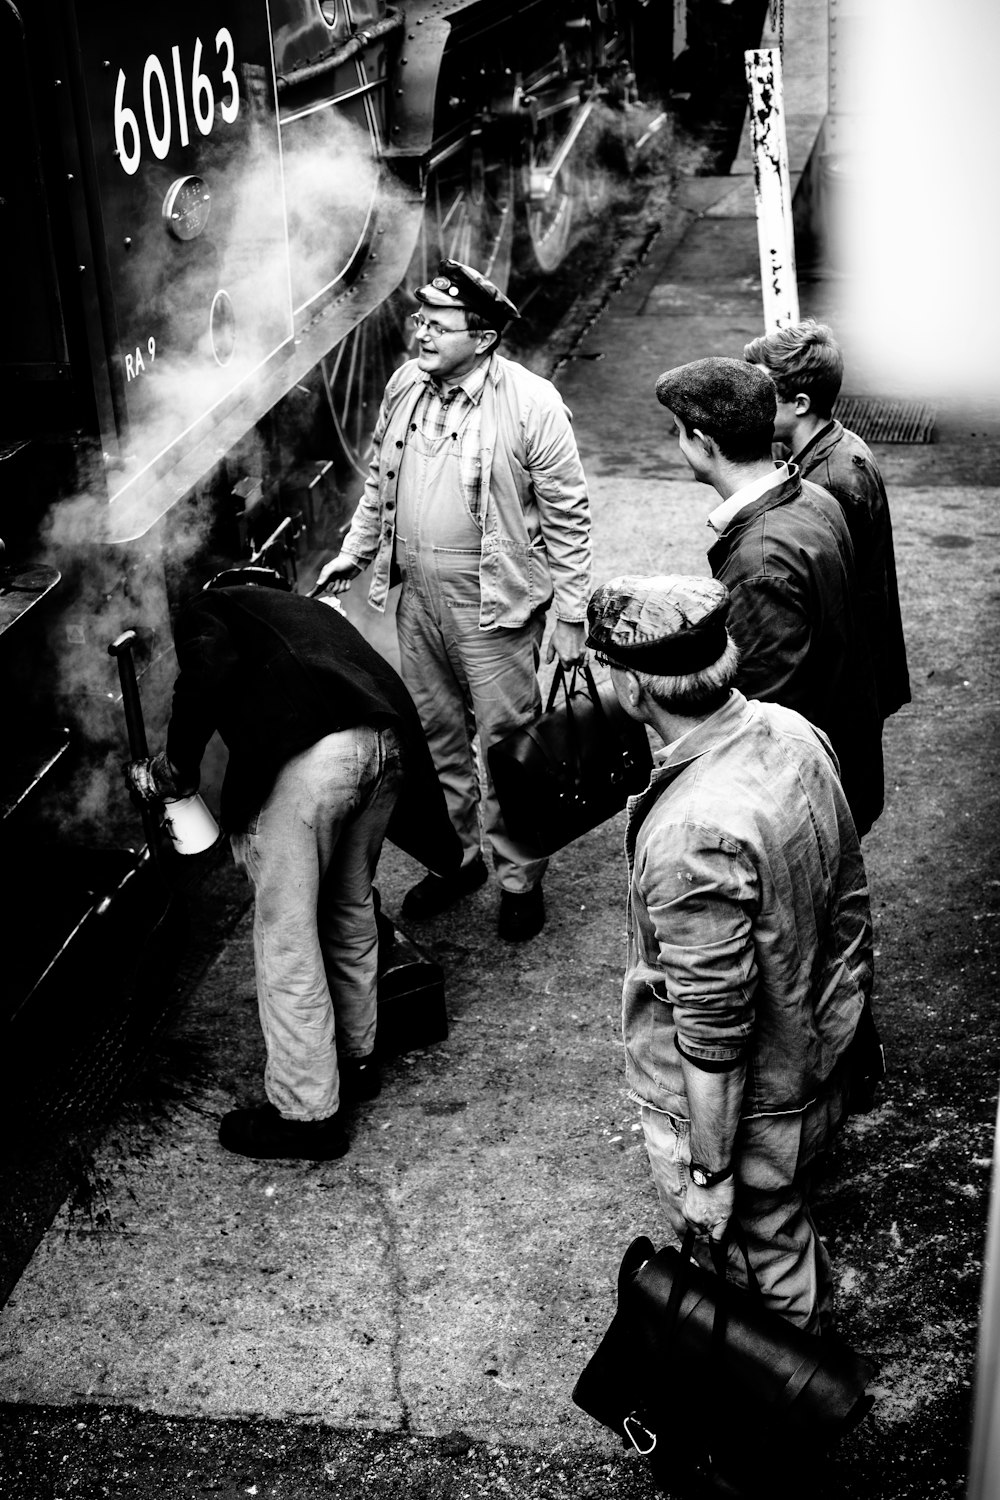 grayscale photo of men standing beside 60163 train